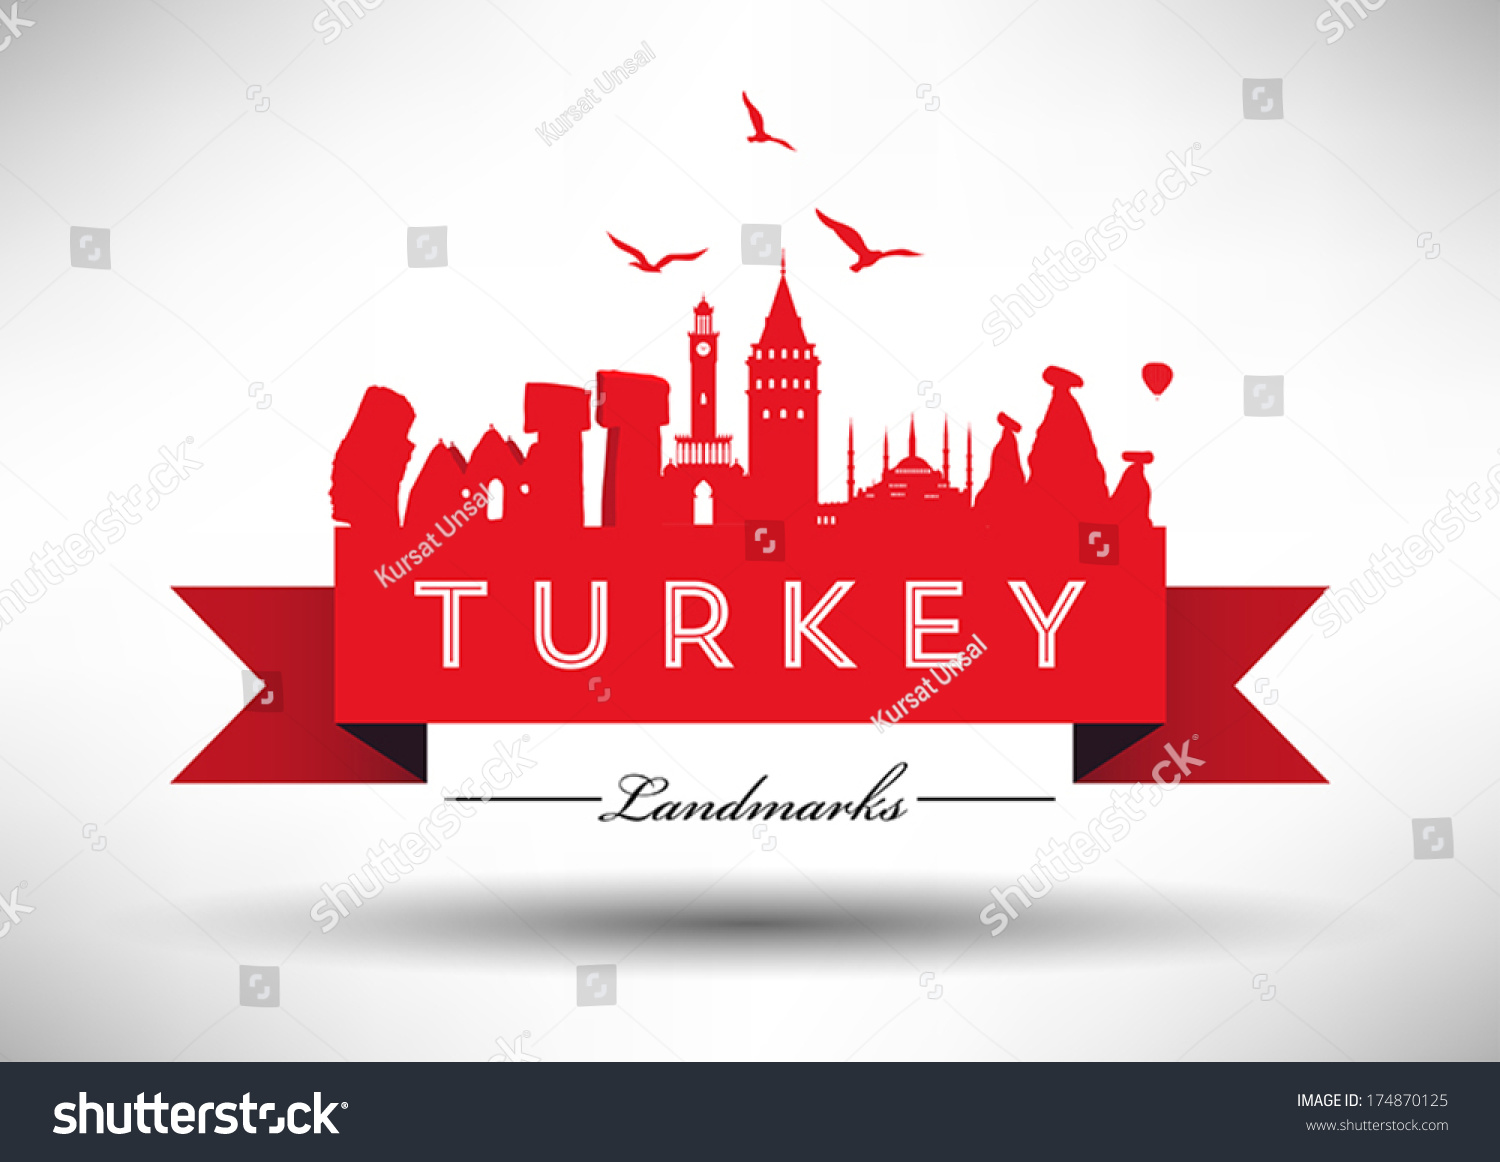 SVG of Turkey's Landmark Design svg